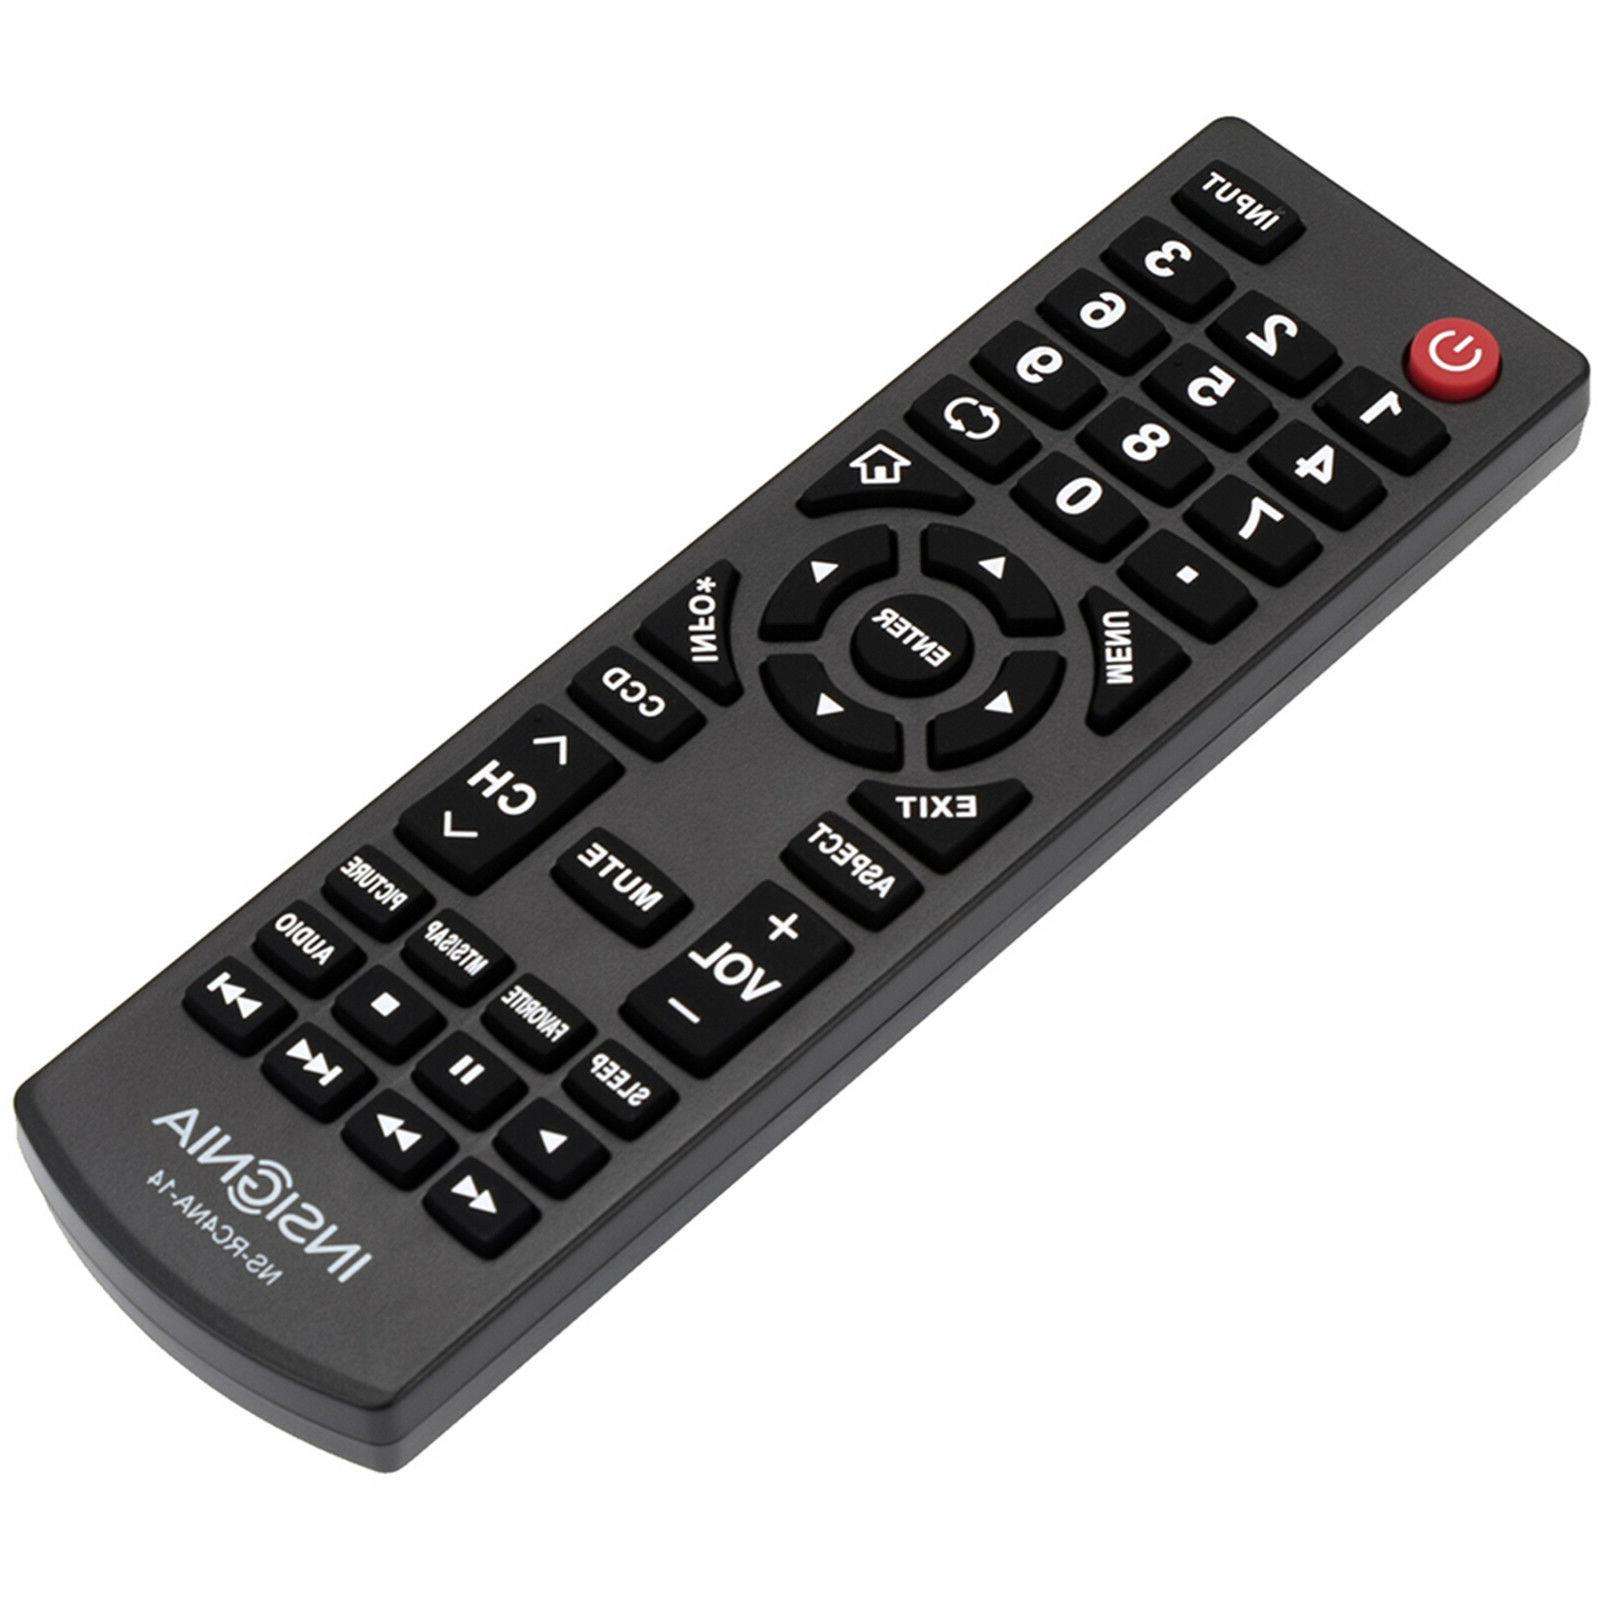 New TV Remote Control NS